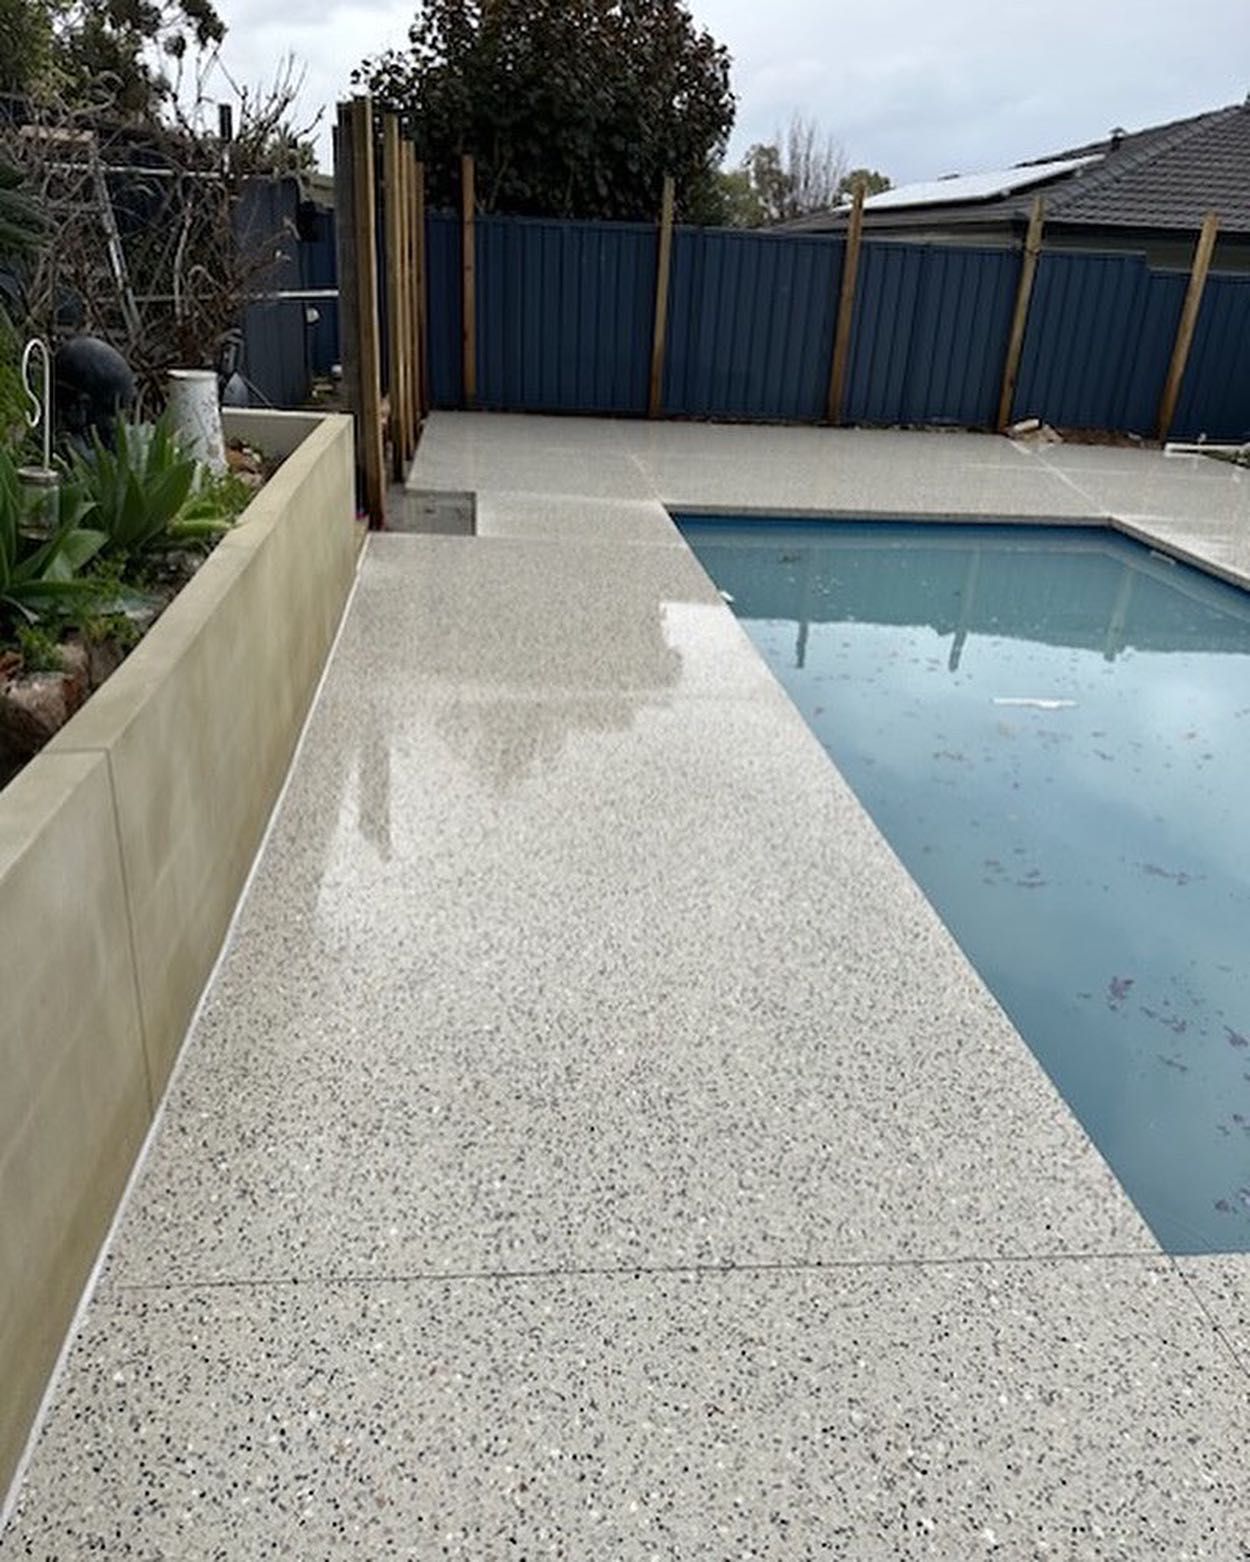 Honed Concrete Pool area in Perth backyard 